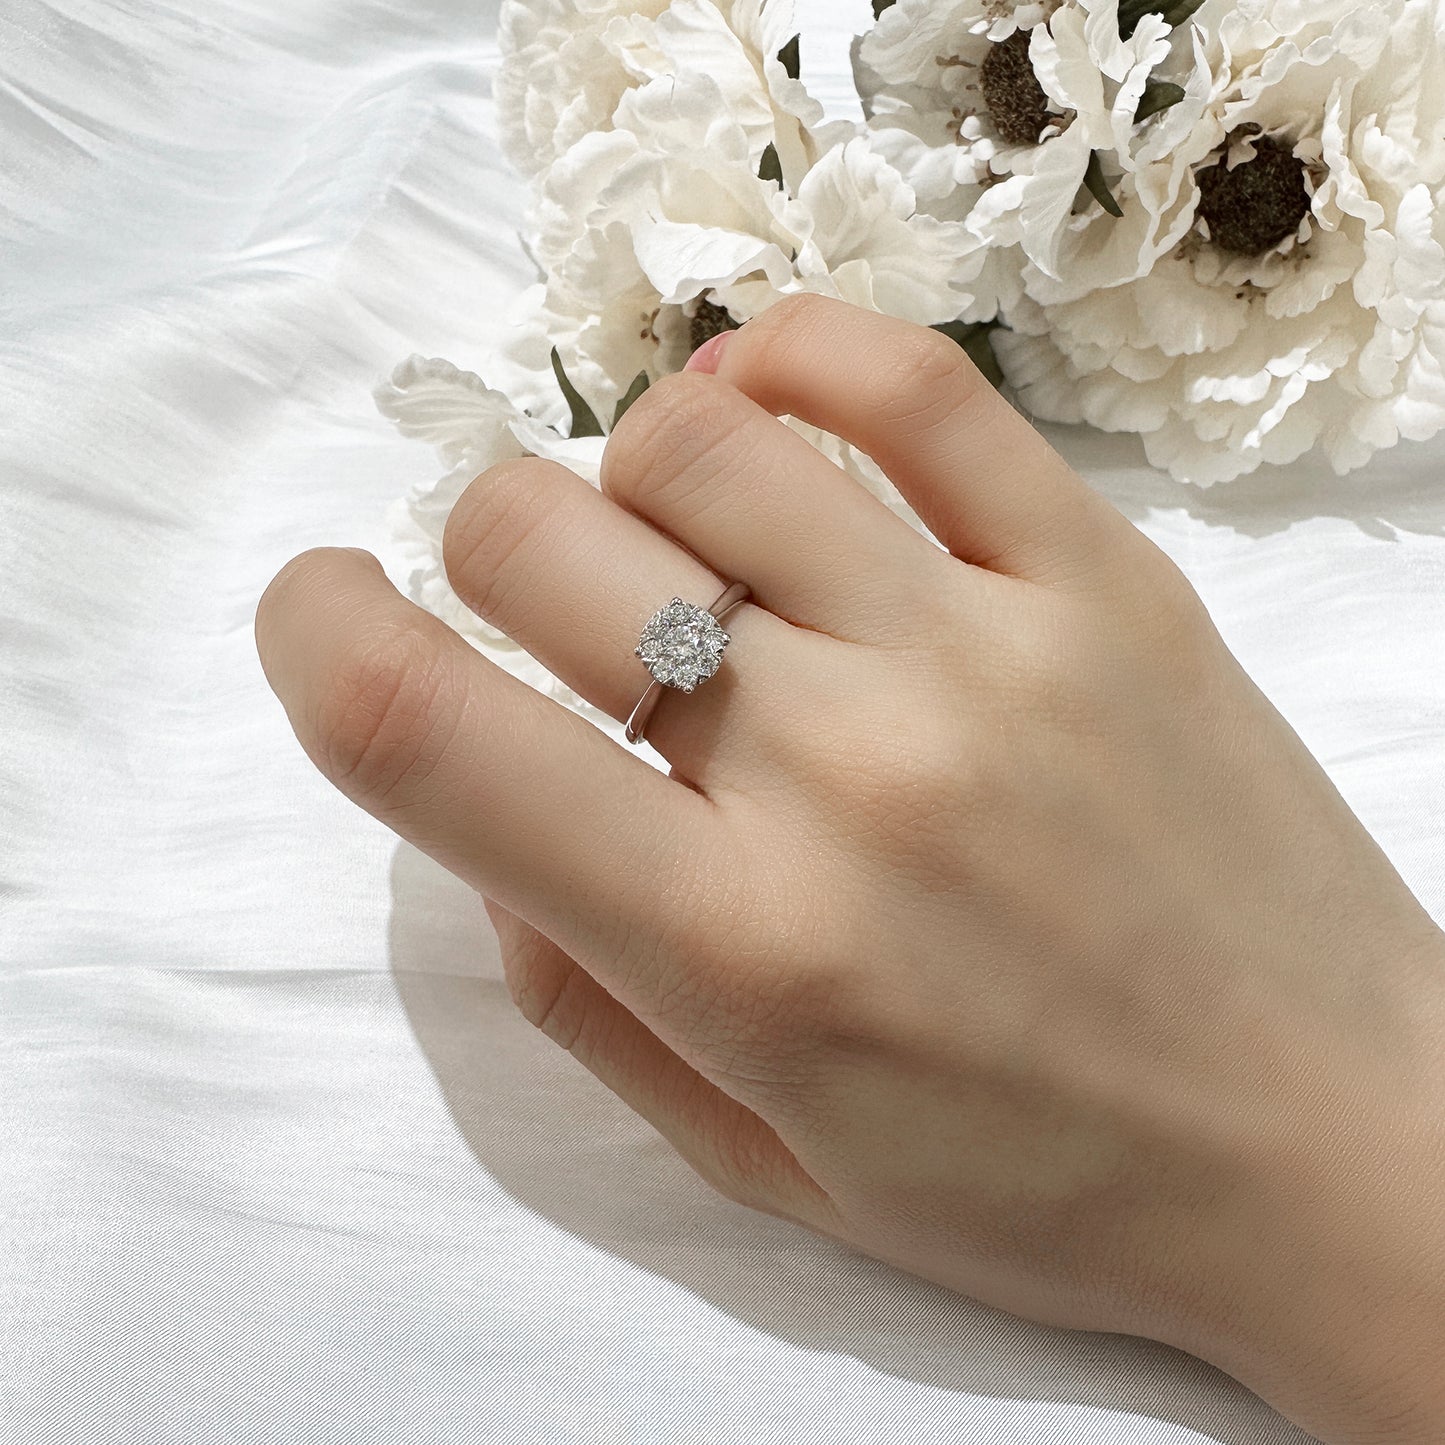 18k白金鑽石戒指在中指上 18k White Gold Illusion Setting Diamond Ring on middle finger